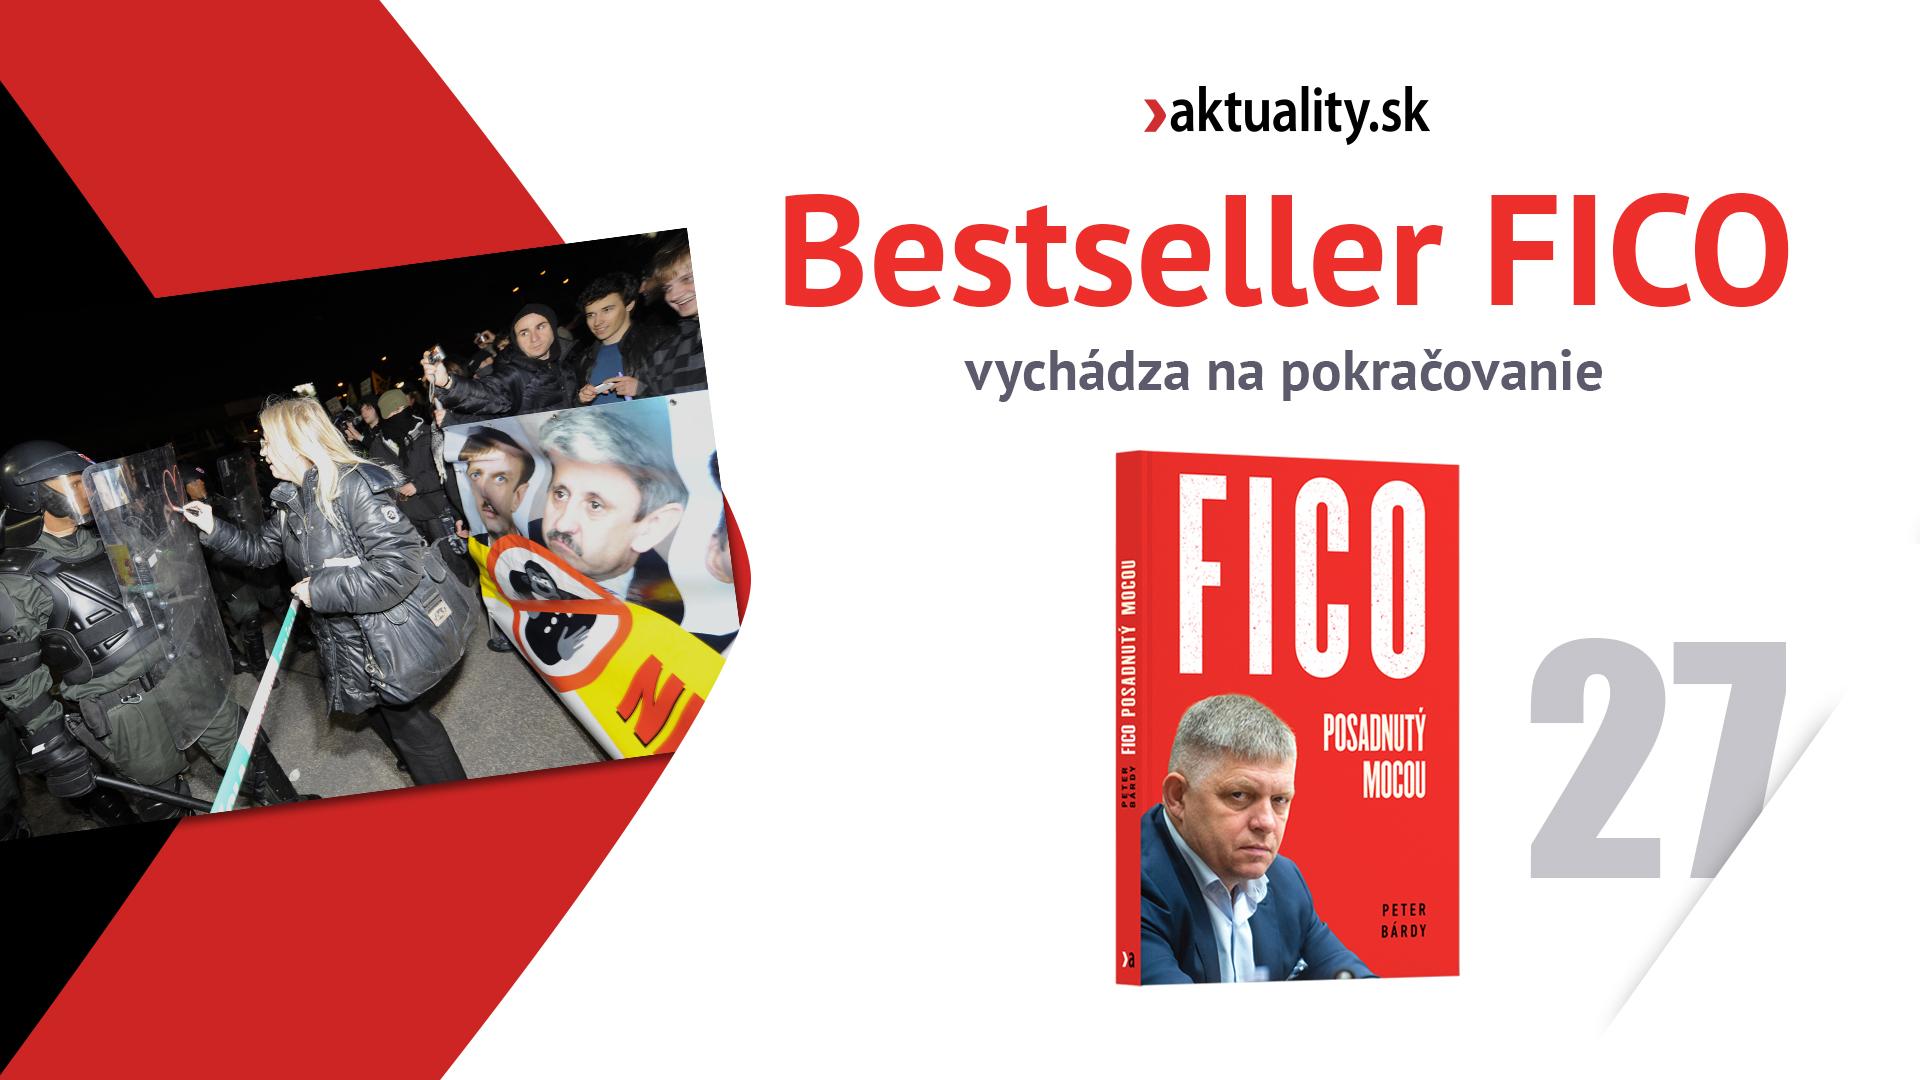 Bestseller Fico – Posadnutý mocou 27